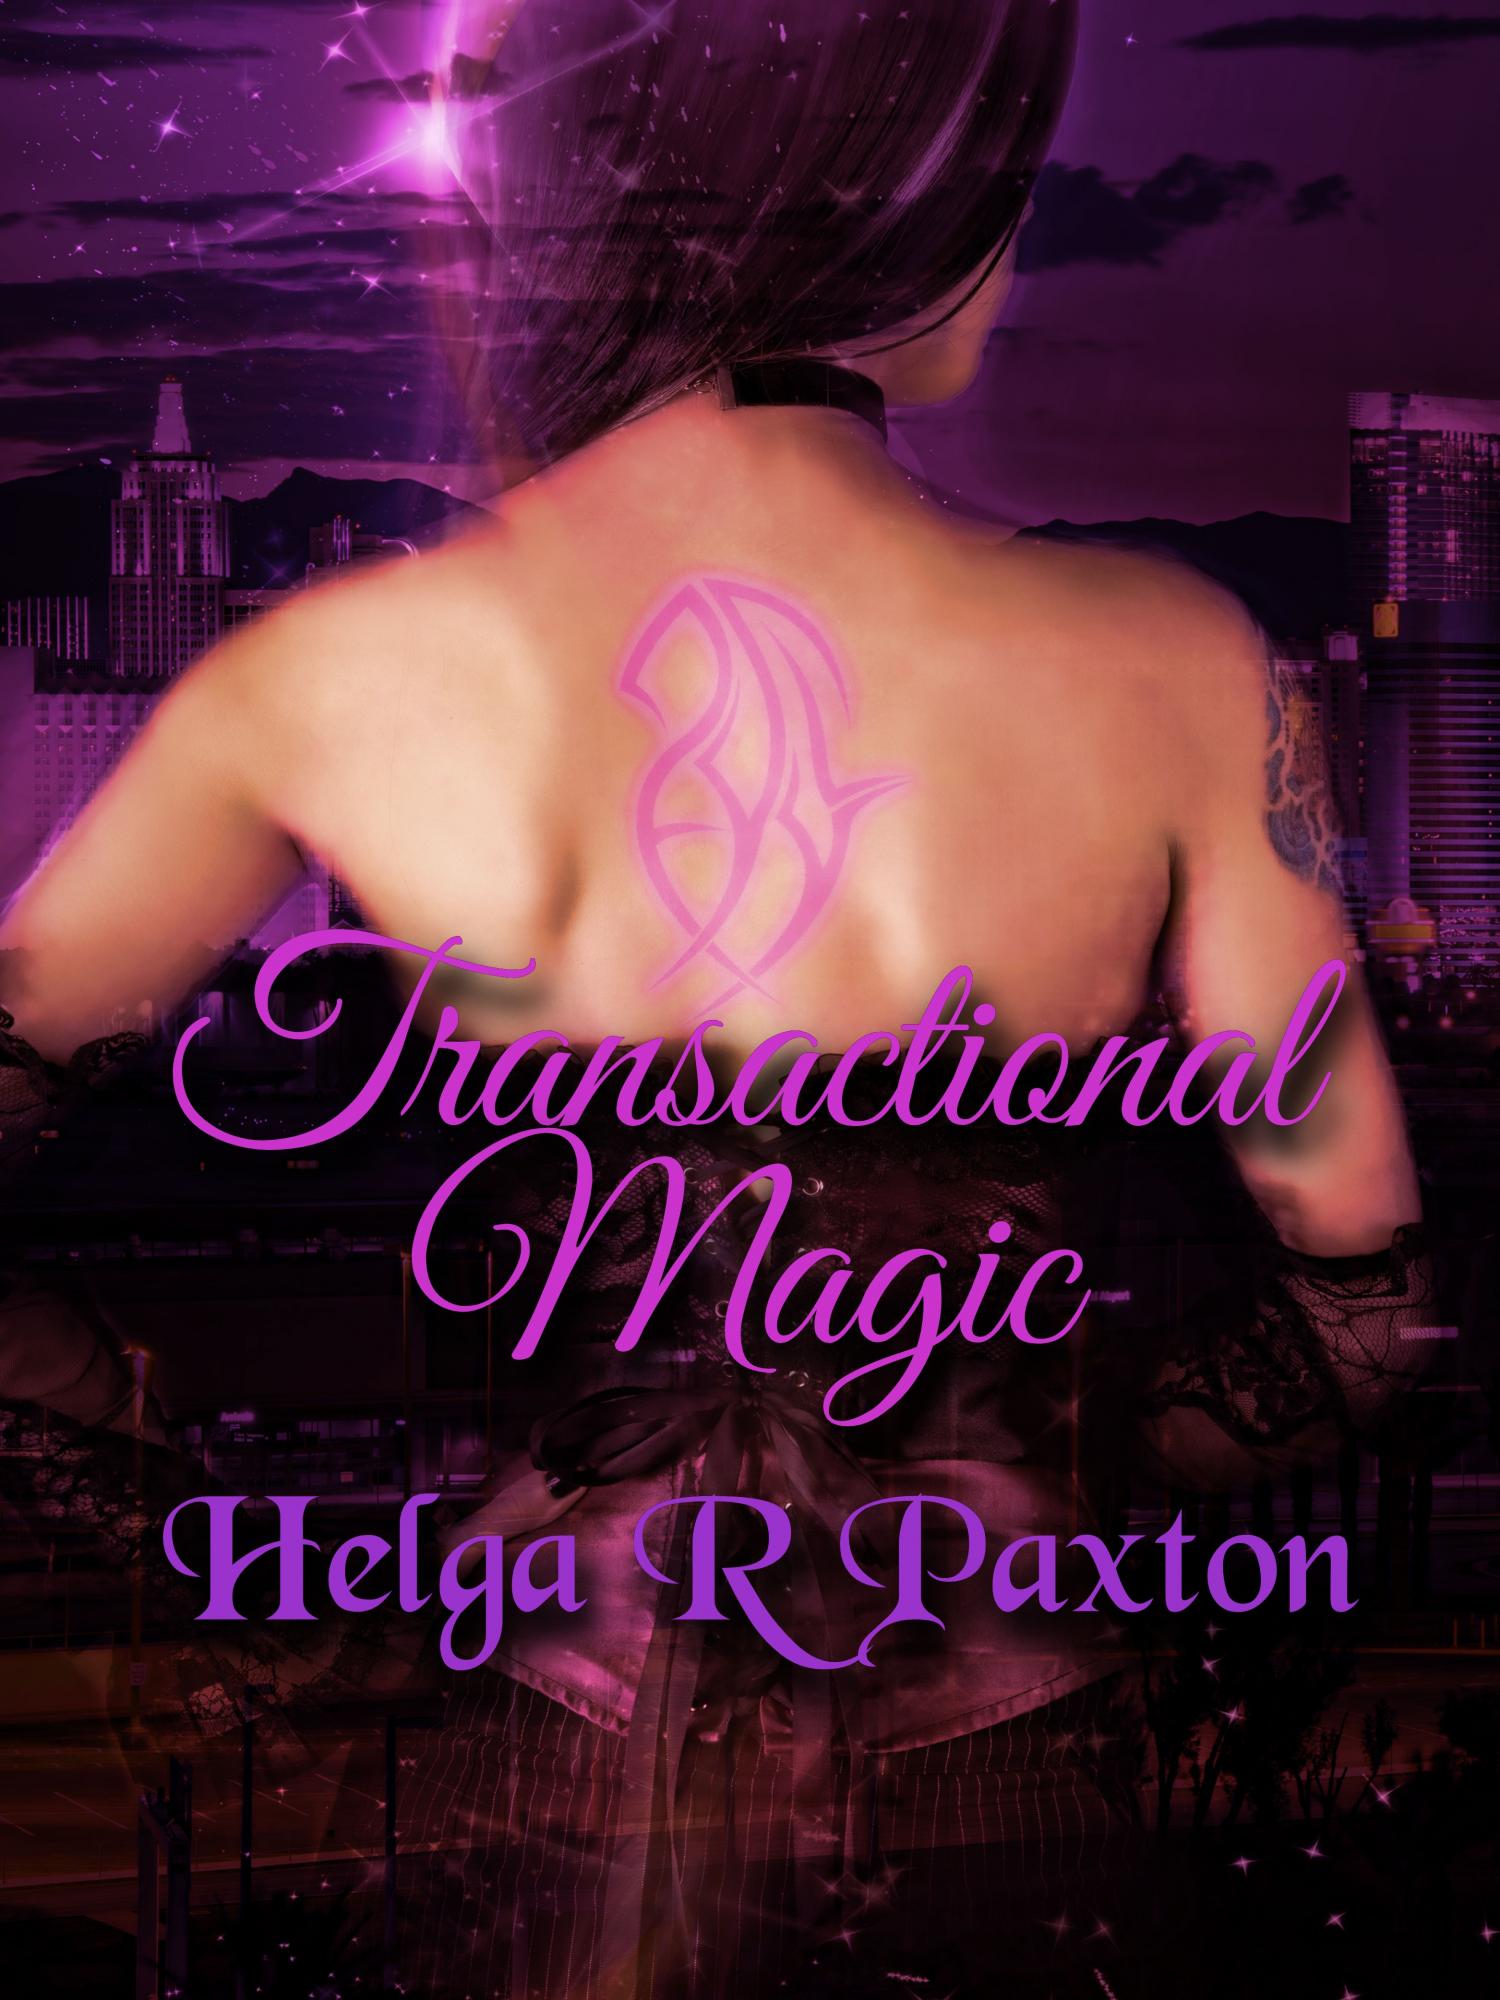 Transactional Magic by Helga R Paxton 09/12/2019